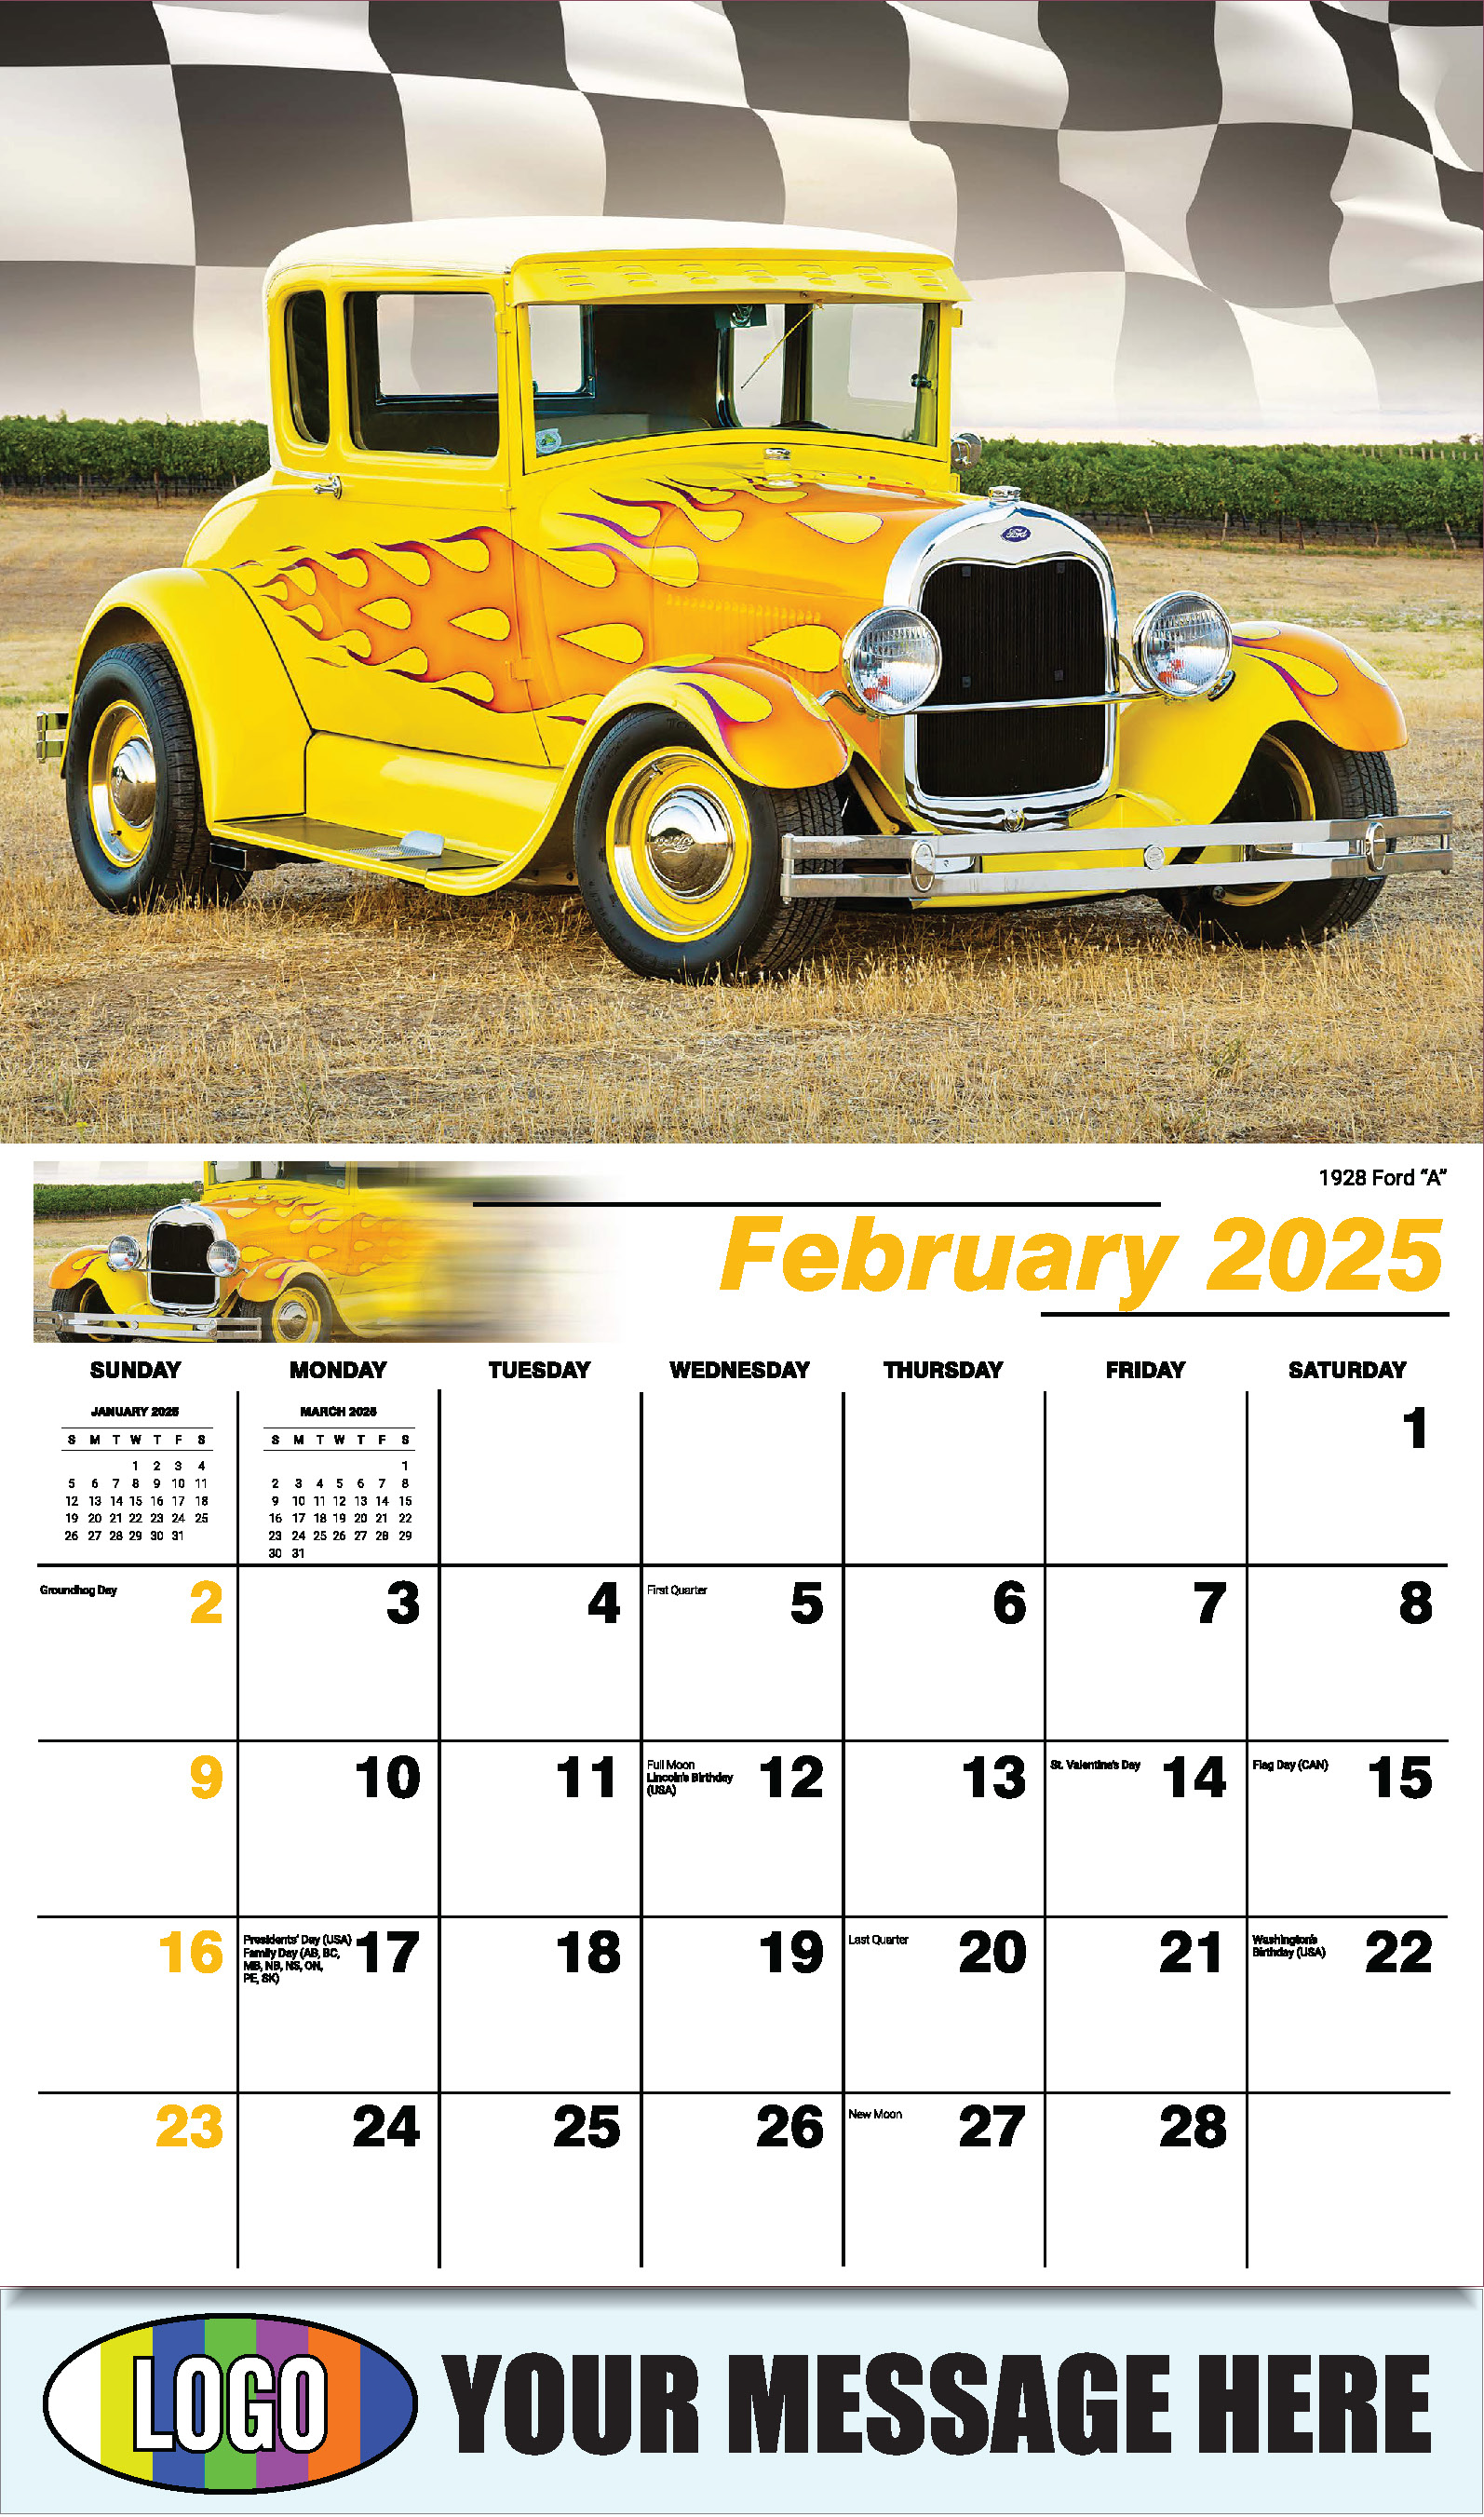 Road Warriors 2025 Automotive Business Promo Wall Calendar - February